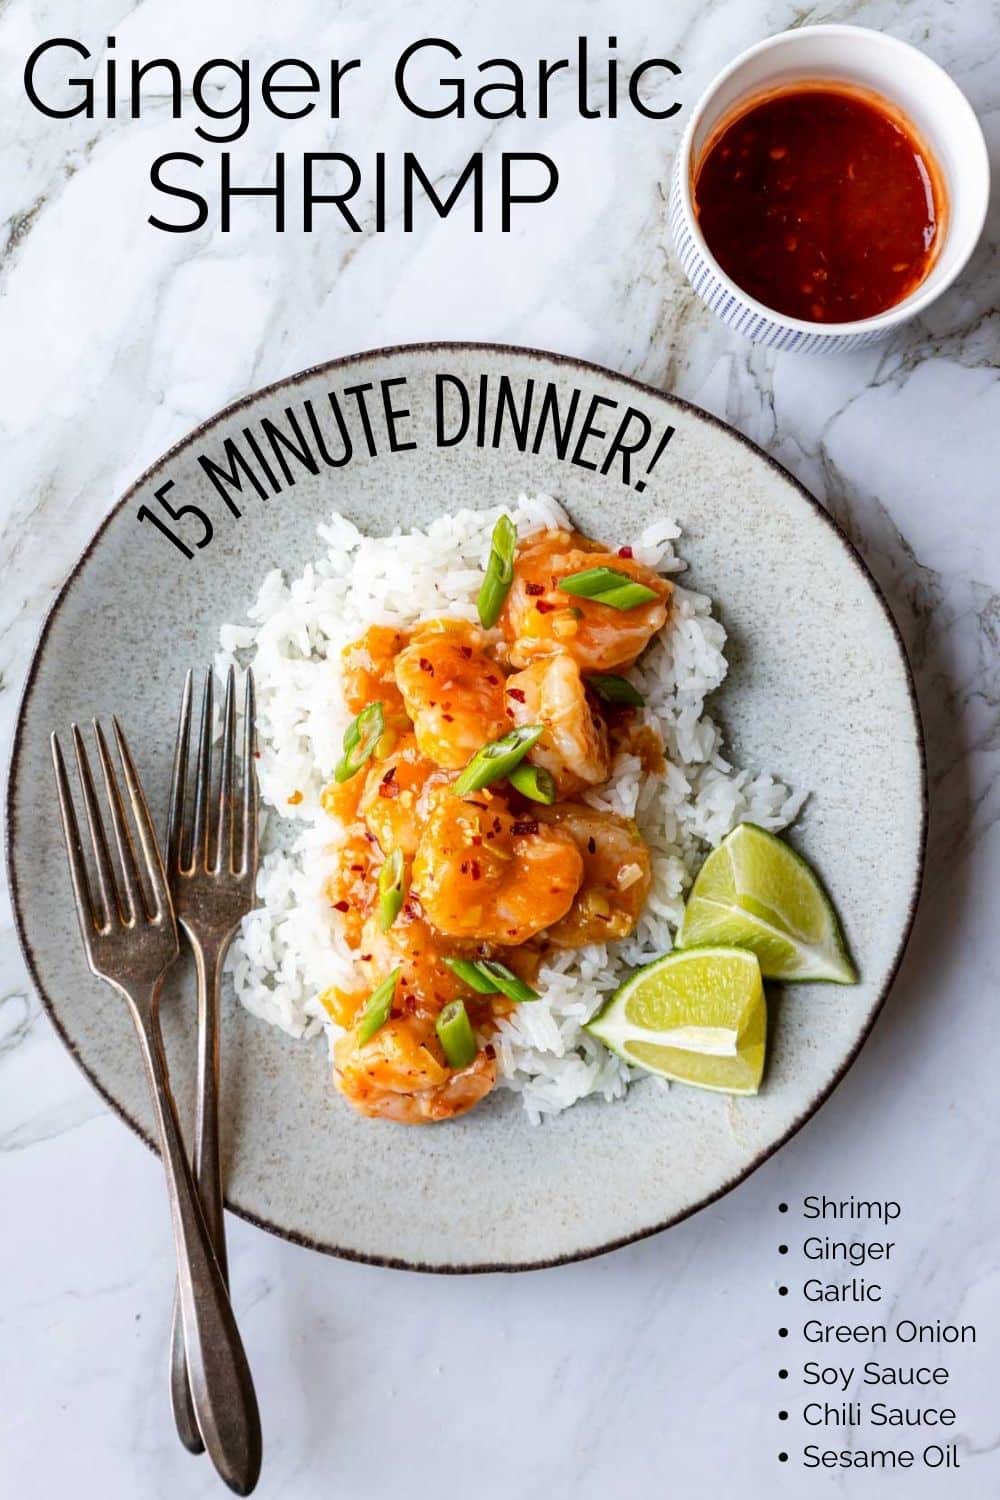 Ginger Garlic Shrimp Pinterest Image with text overlay